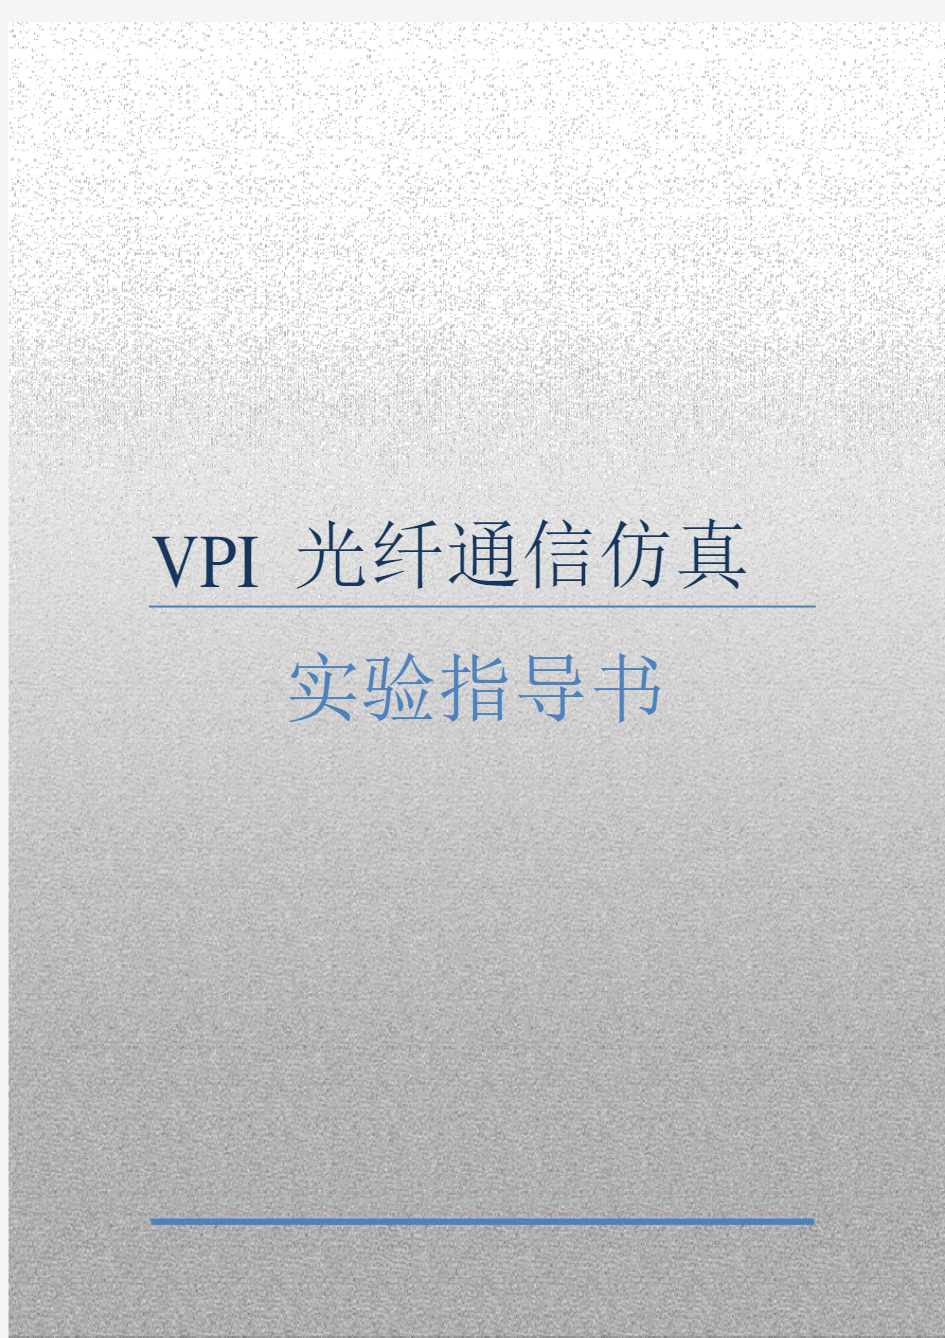 VPI上机实验指导书-学生.pdf解析